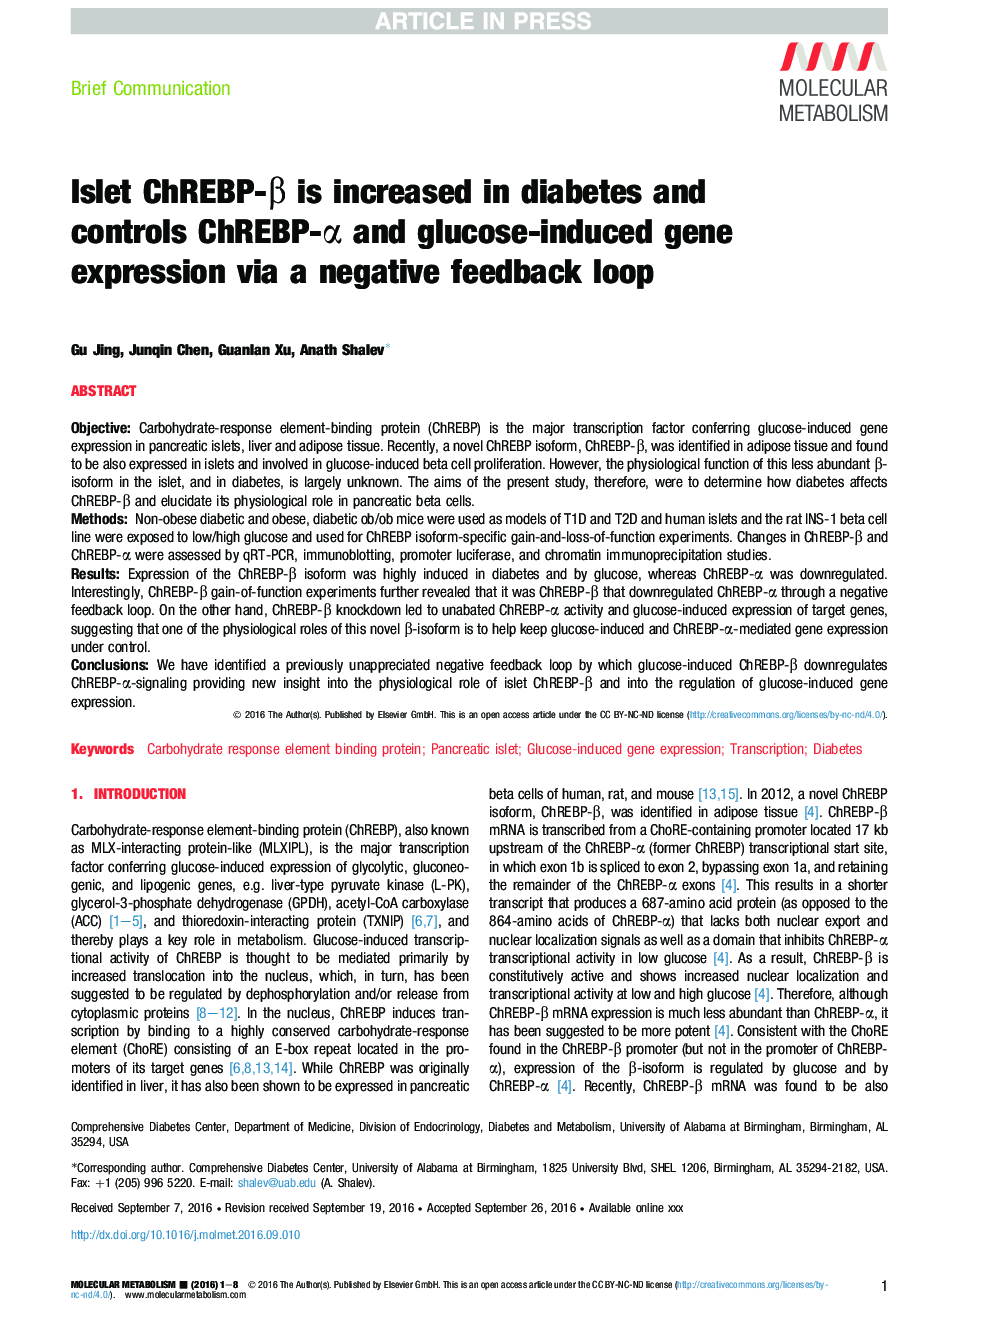 Islet ChREBP-Î² is increased in diabetes and controls ChREBP-Î± and glucose-induced gene expression via a negative feedback loop